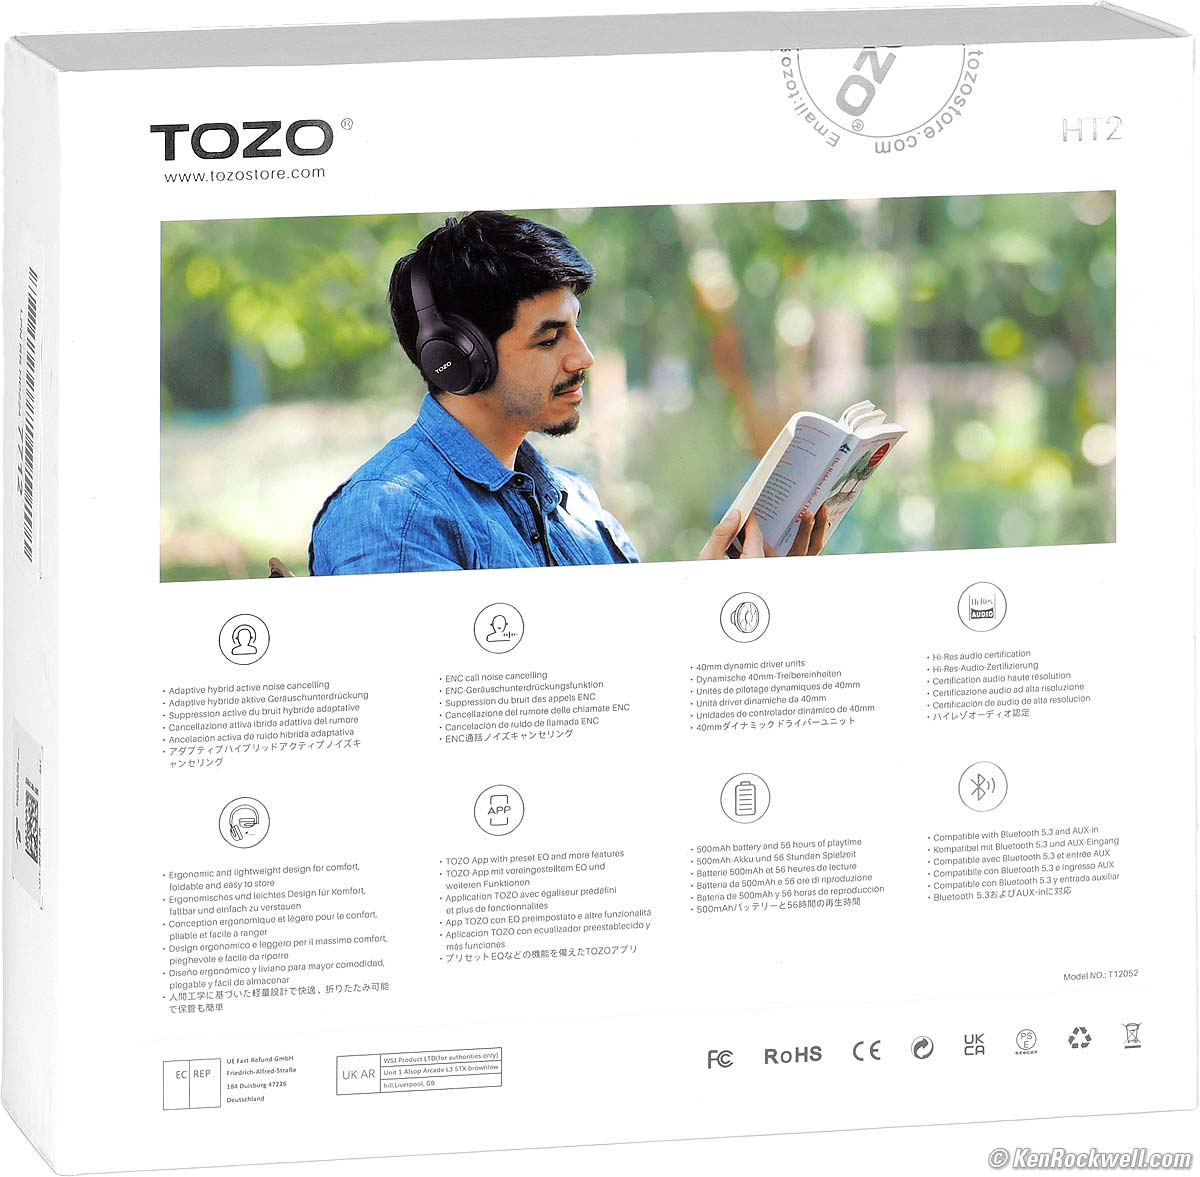 TOZO HT2 Hybrid Active Noise Cancelling Headphones Hi-Res Audio 60H  Playtime